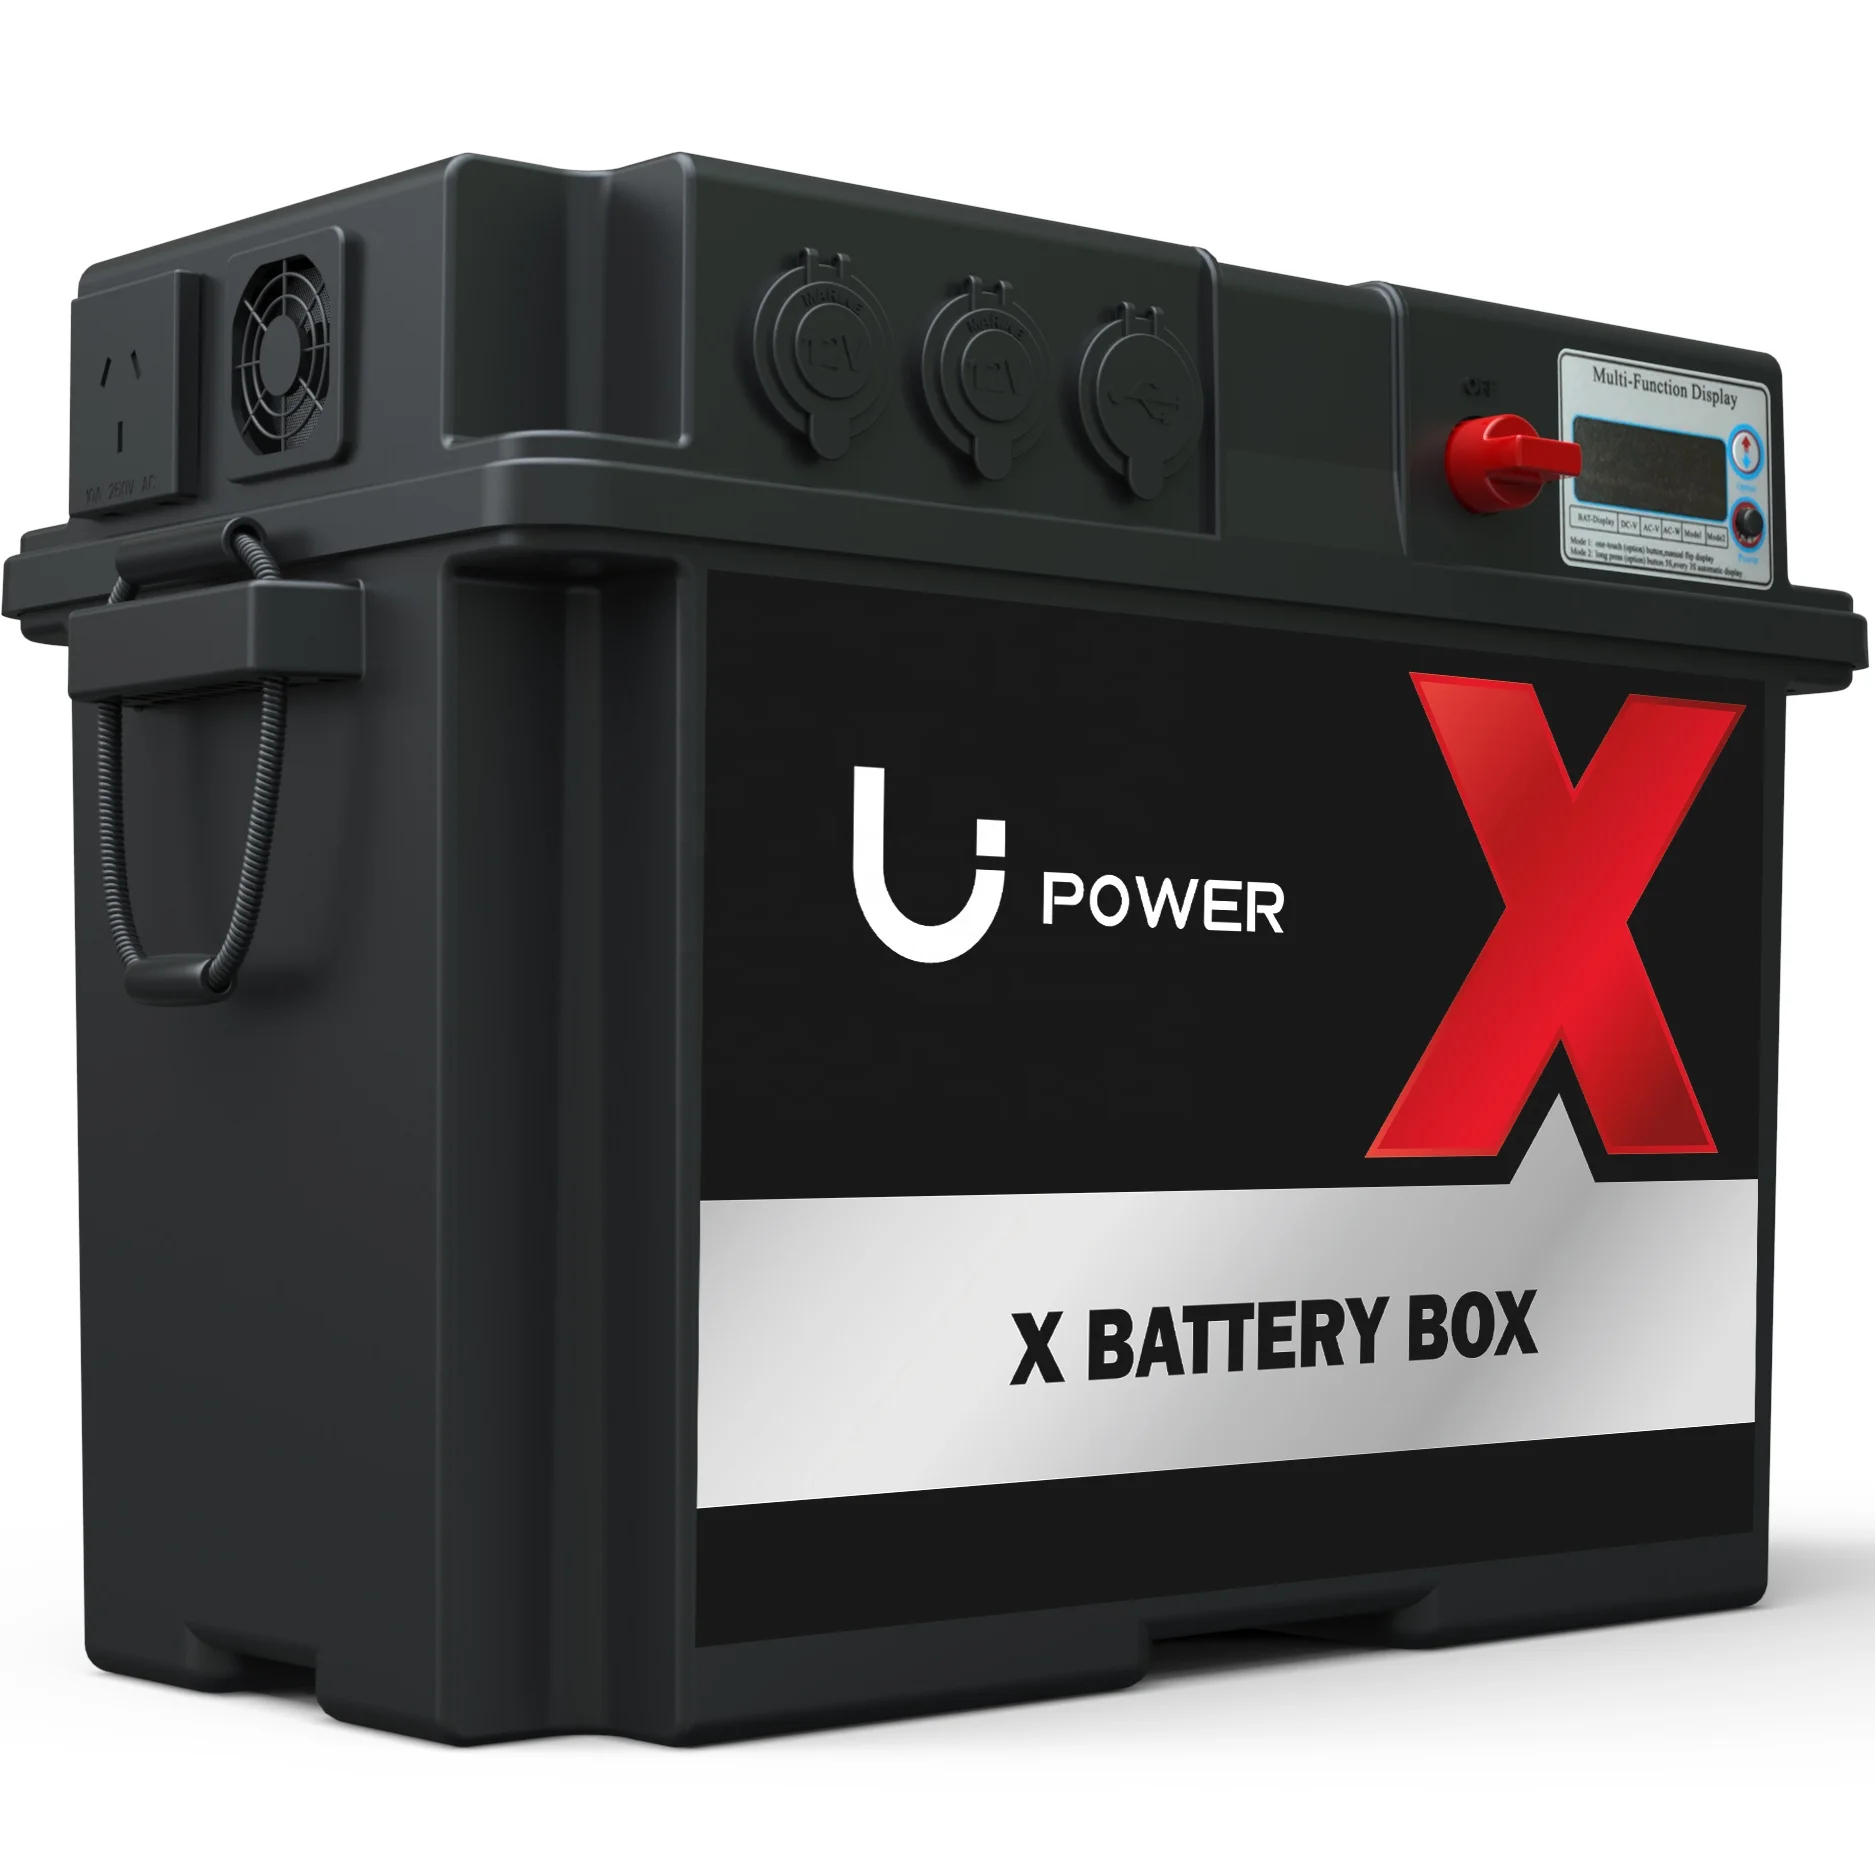 Battery box. Smart Power Battery Box. Batt Box.